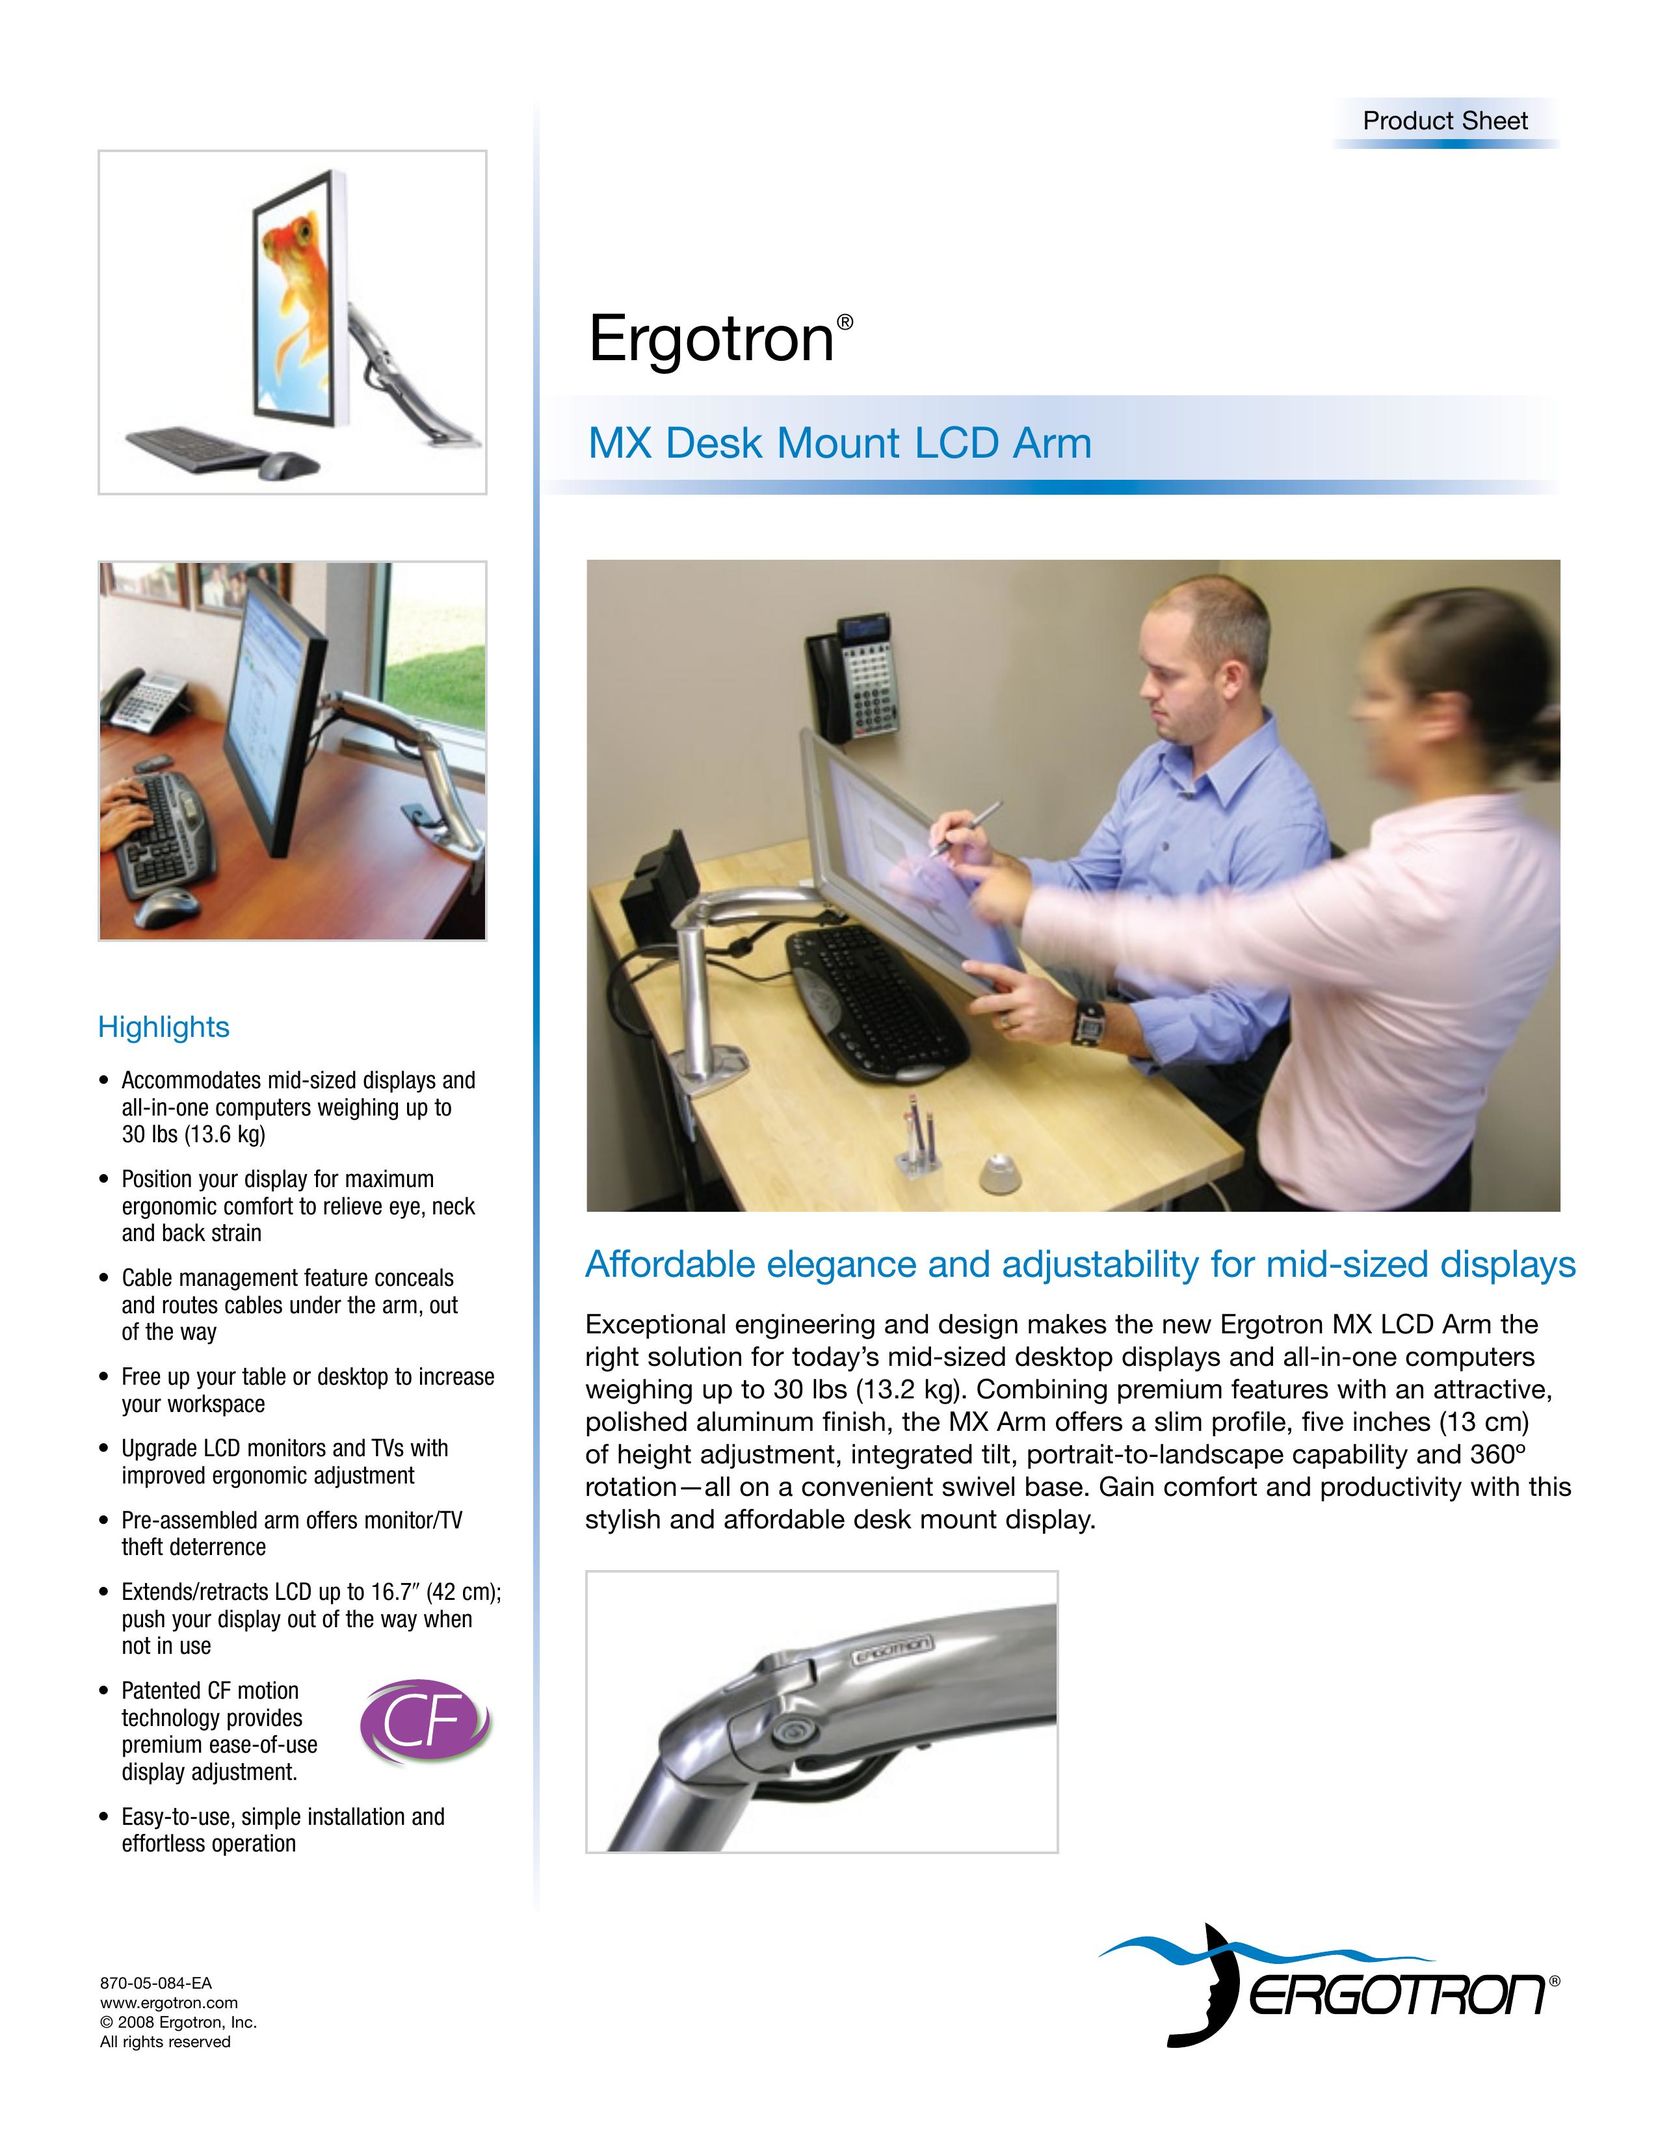 Ergotron 45-214-026 Indoor Furnishings User Manual